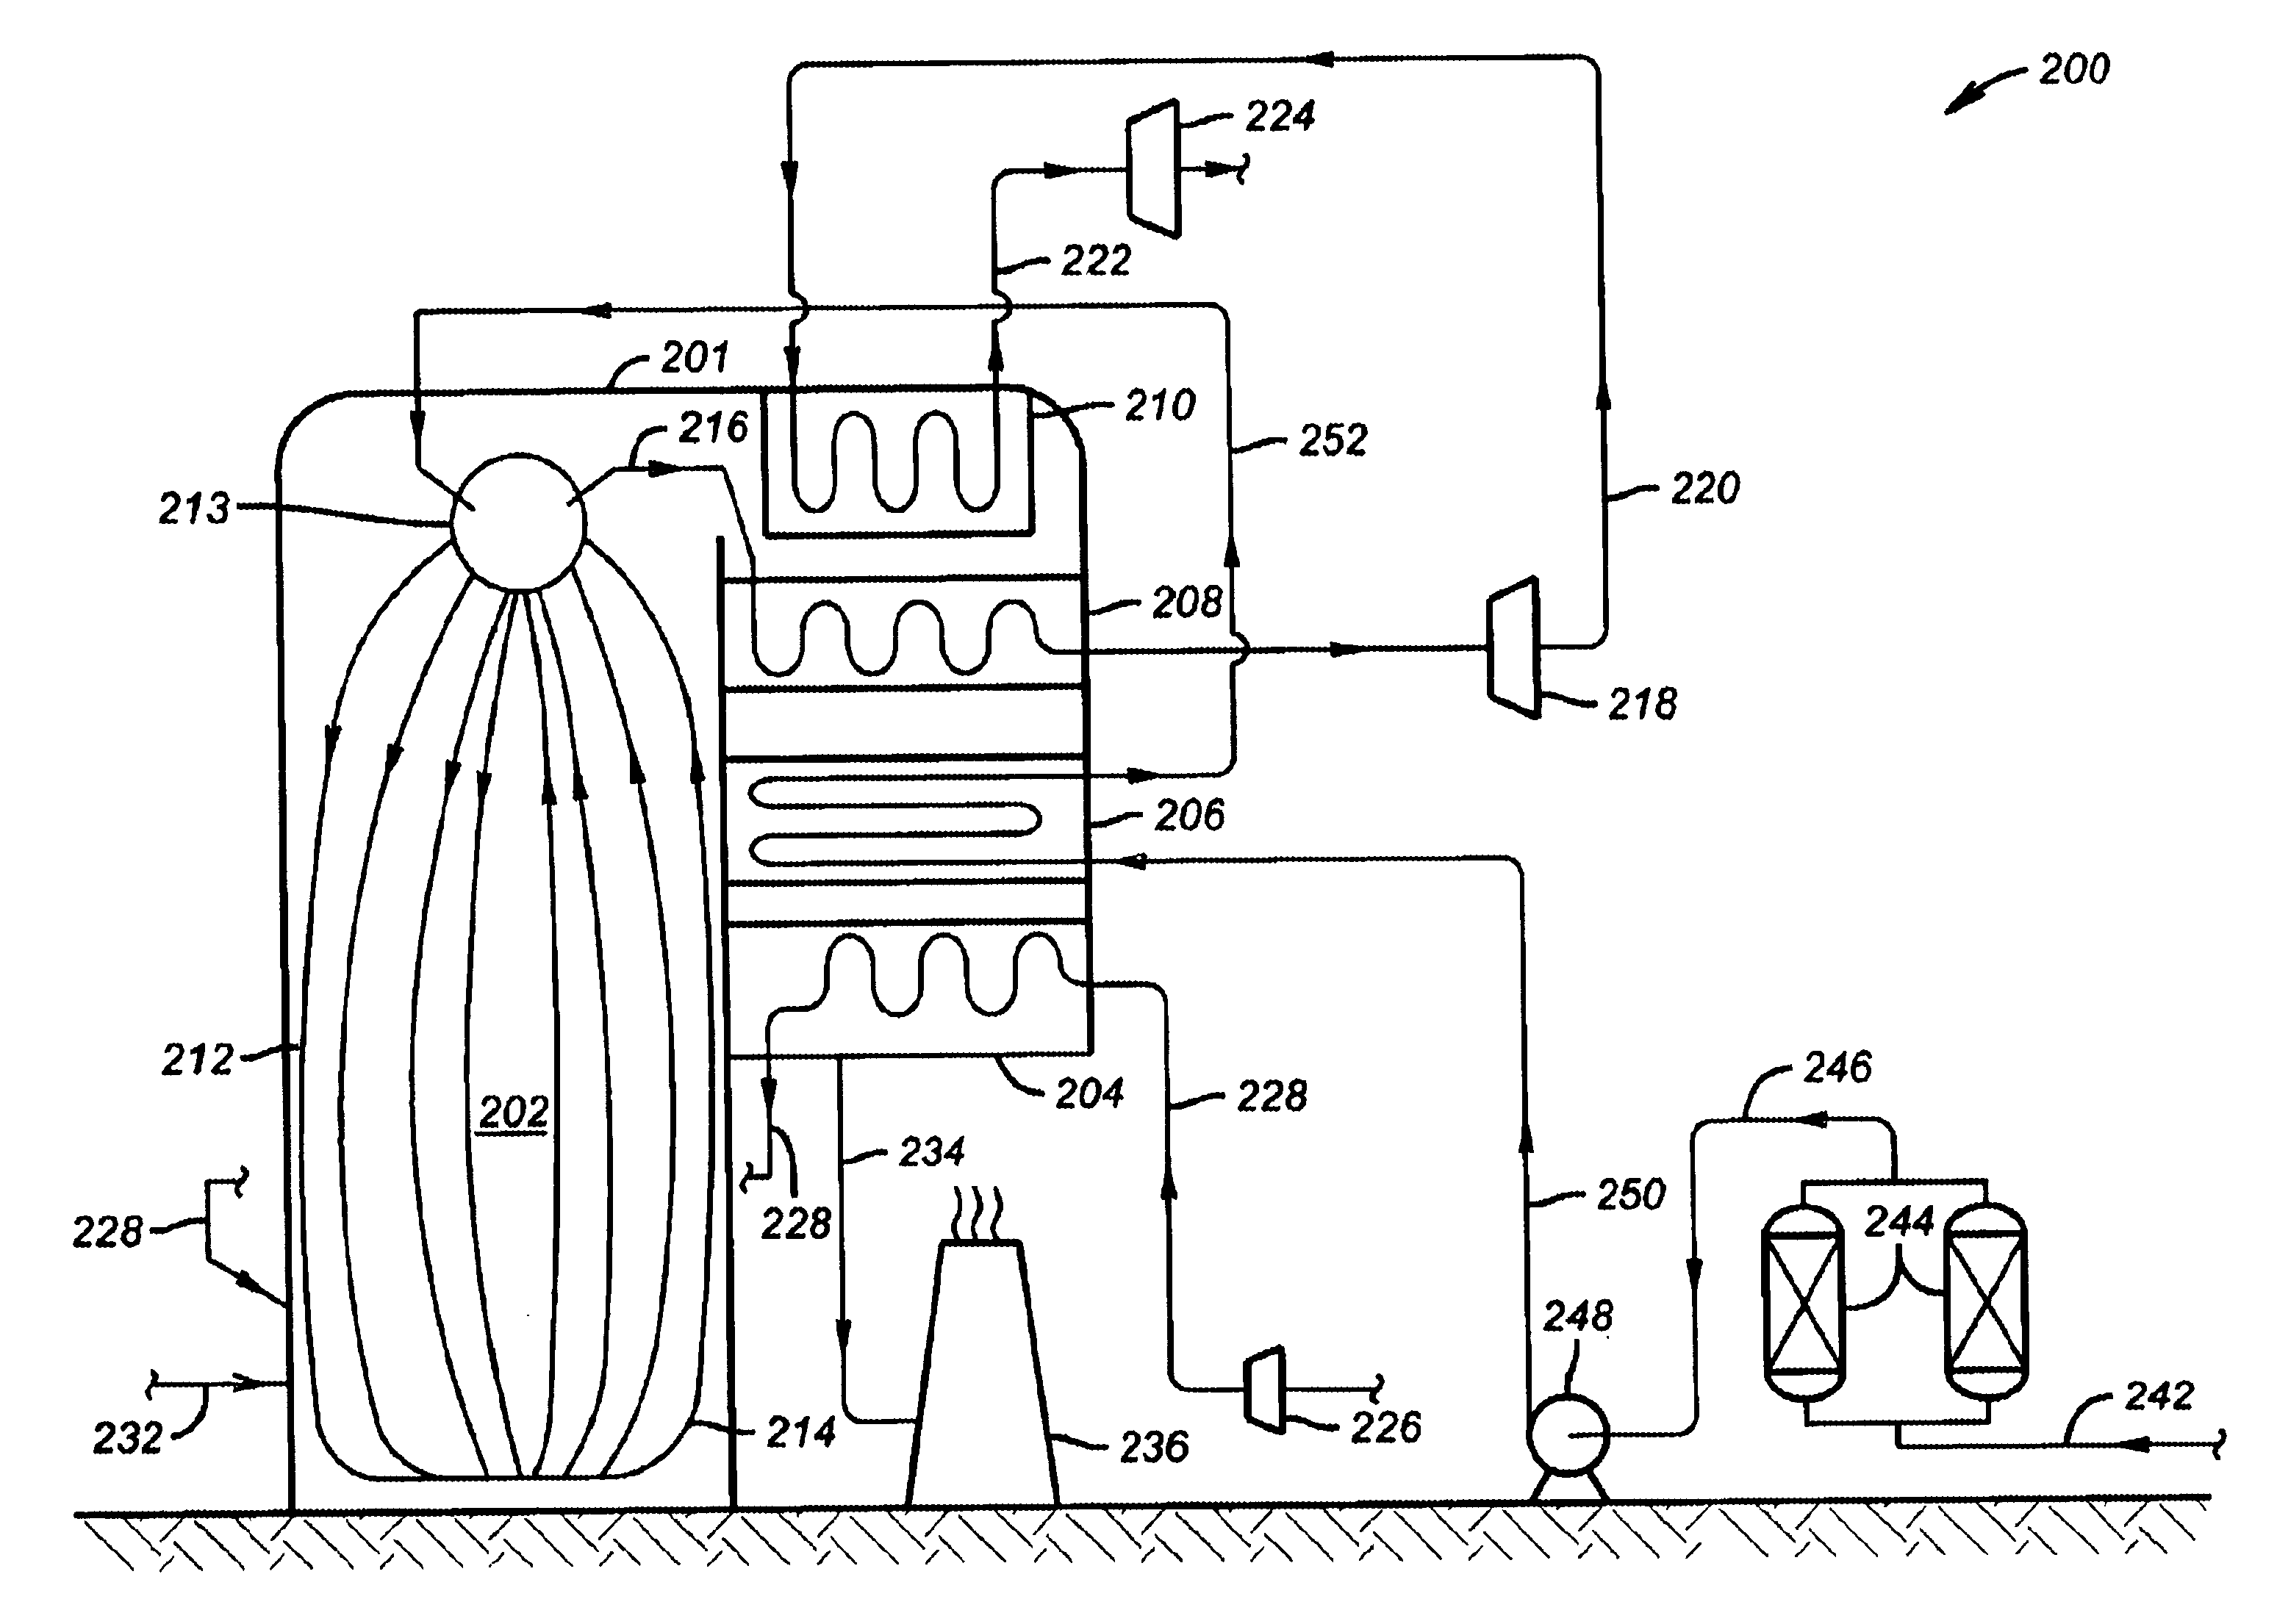 Steam generation apparatus and methods